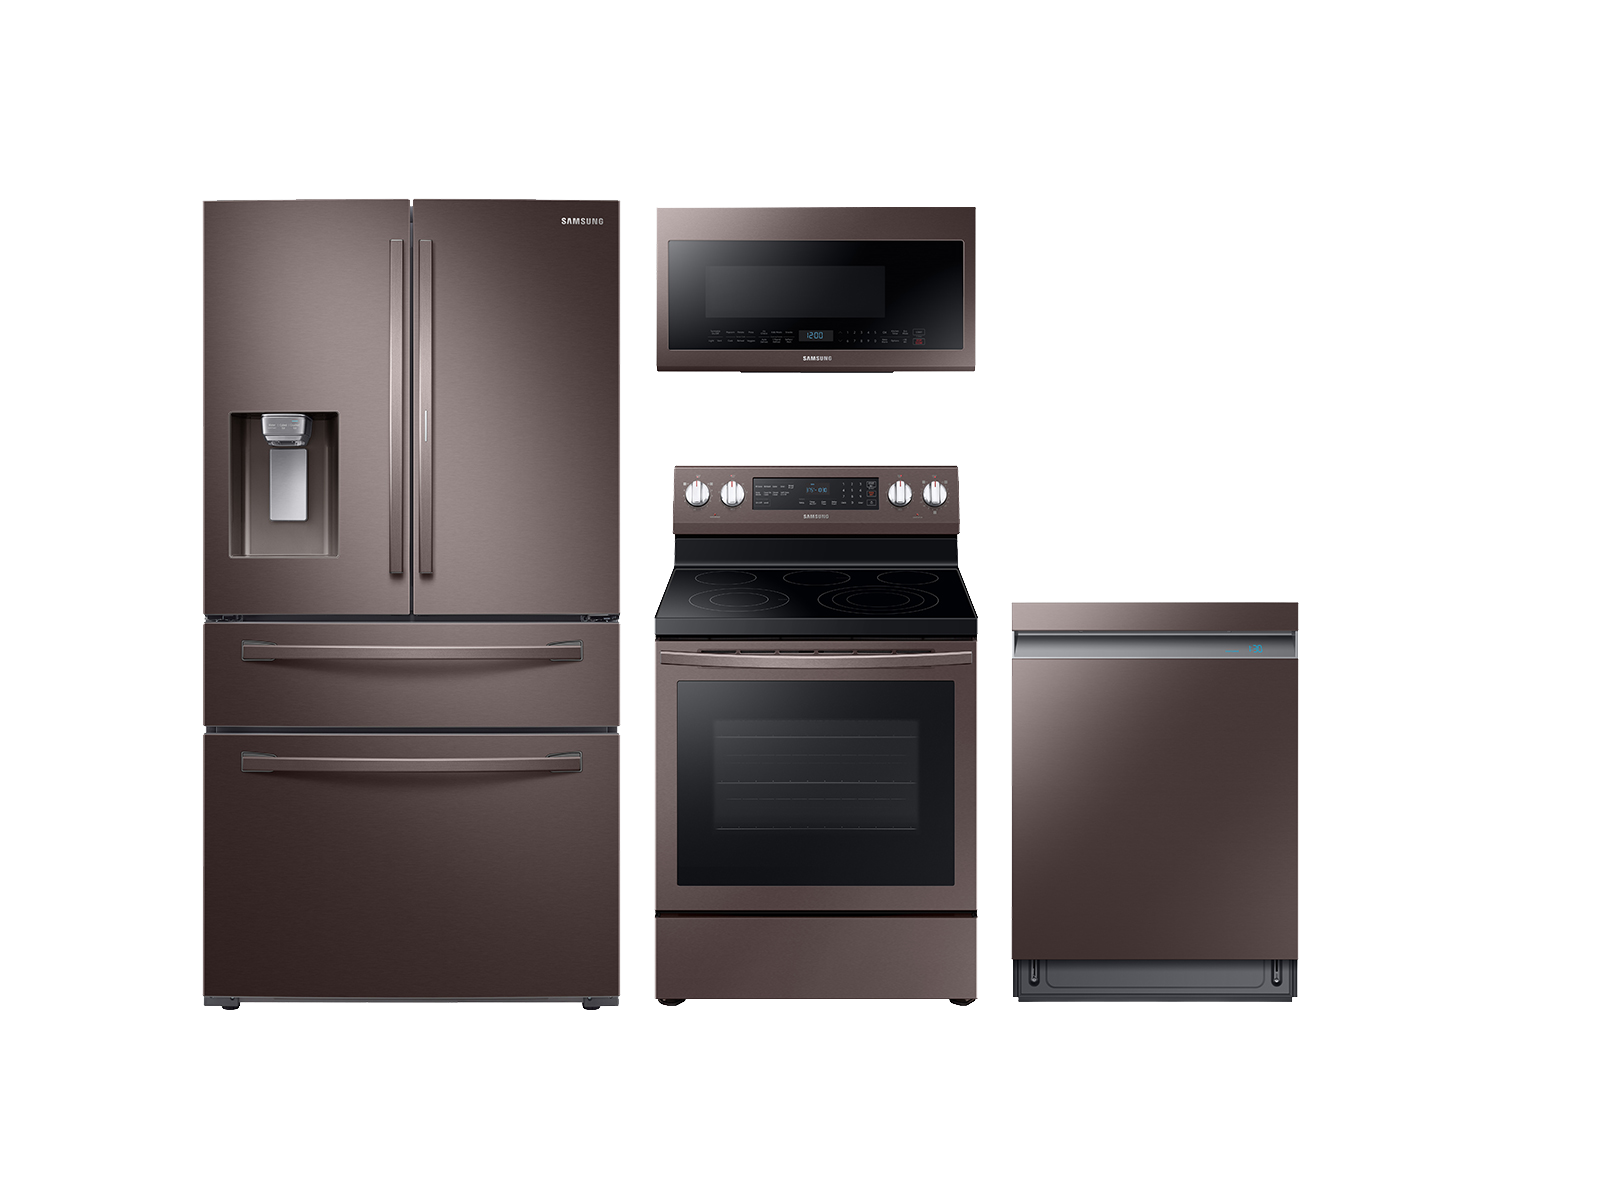 Samsung 4-door Refrigerator + Electric Range + Linear Wash Dishwasher + Microwave Kitchen Package in Tuscan Stainless(BNDL-1646991128444)